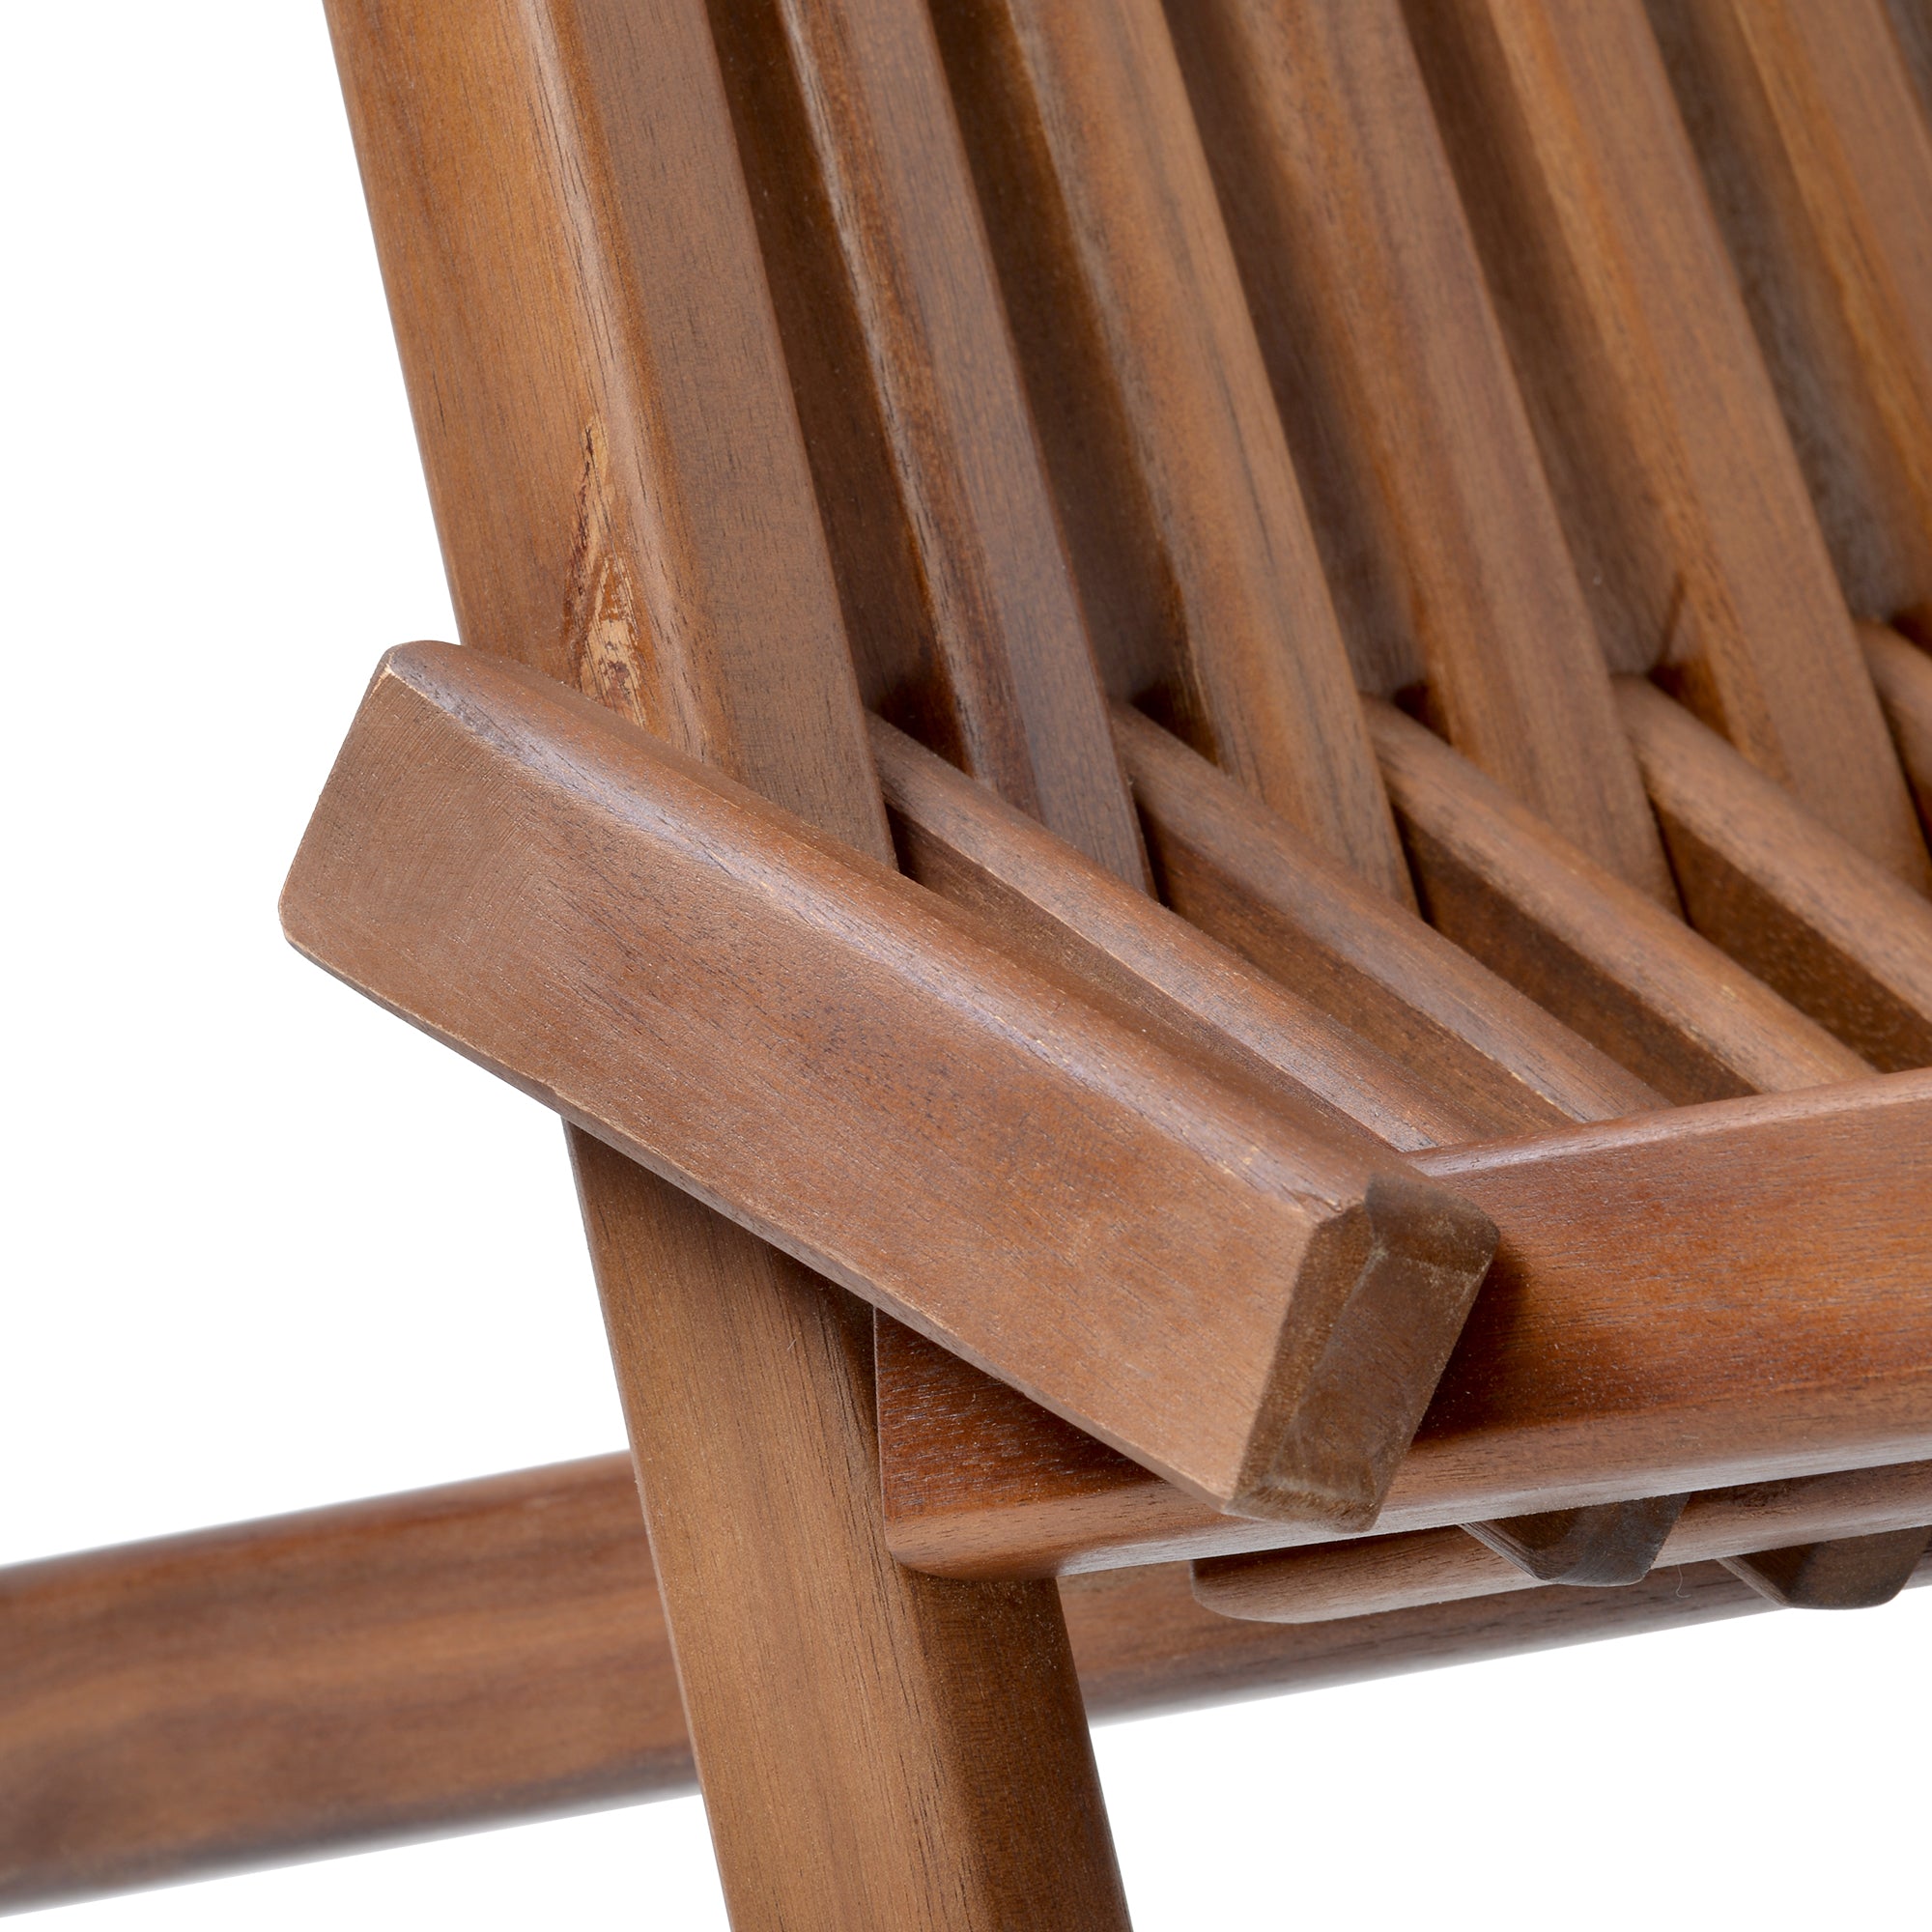 RaDEWAY Folding wood chair